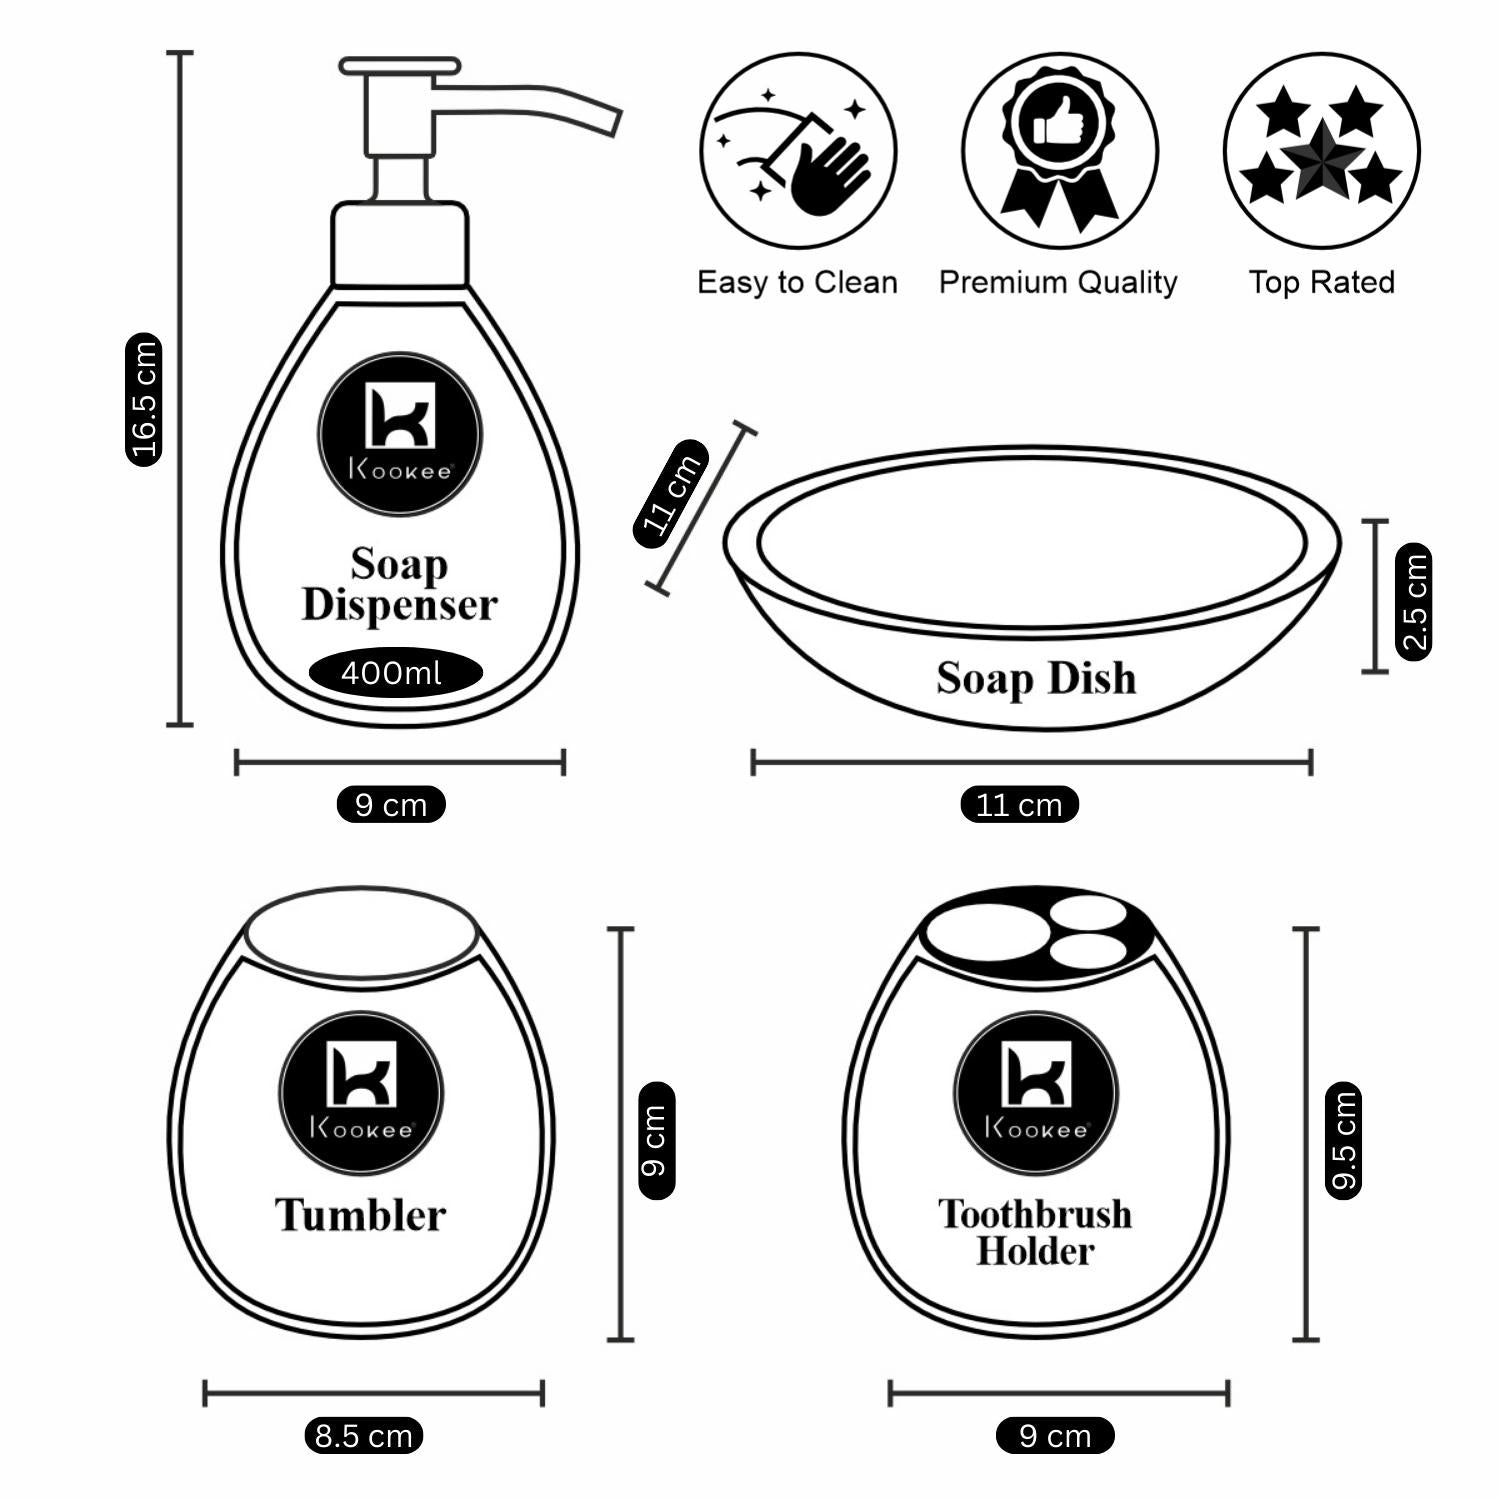 Ceramic Bathroom Accessories Set of 4 Bath Set with Soap Dispenser (9642)